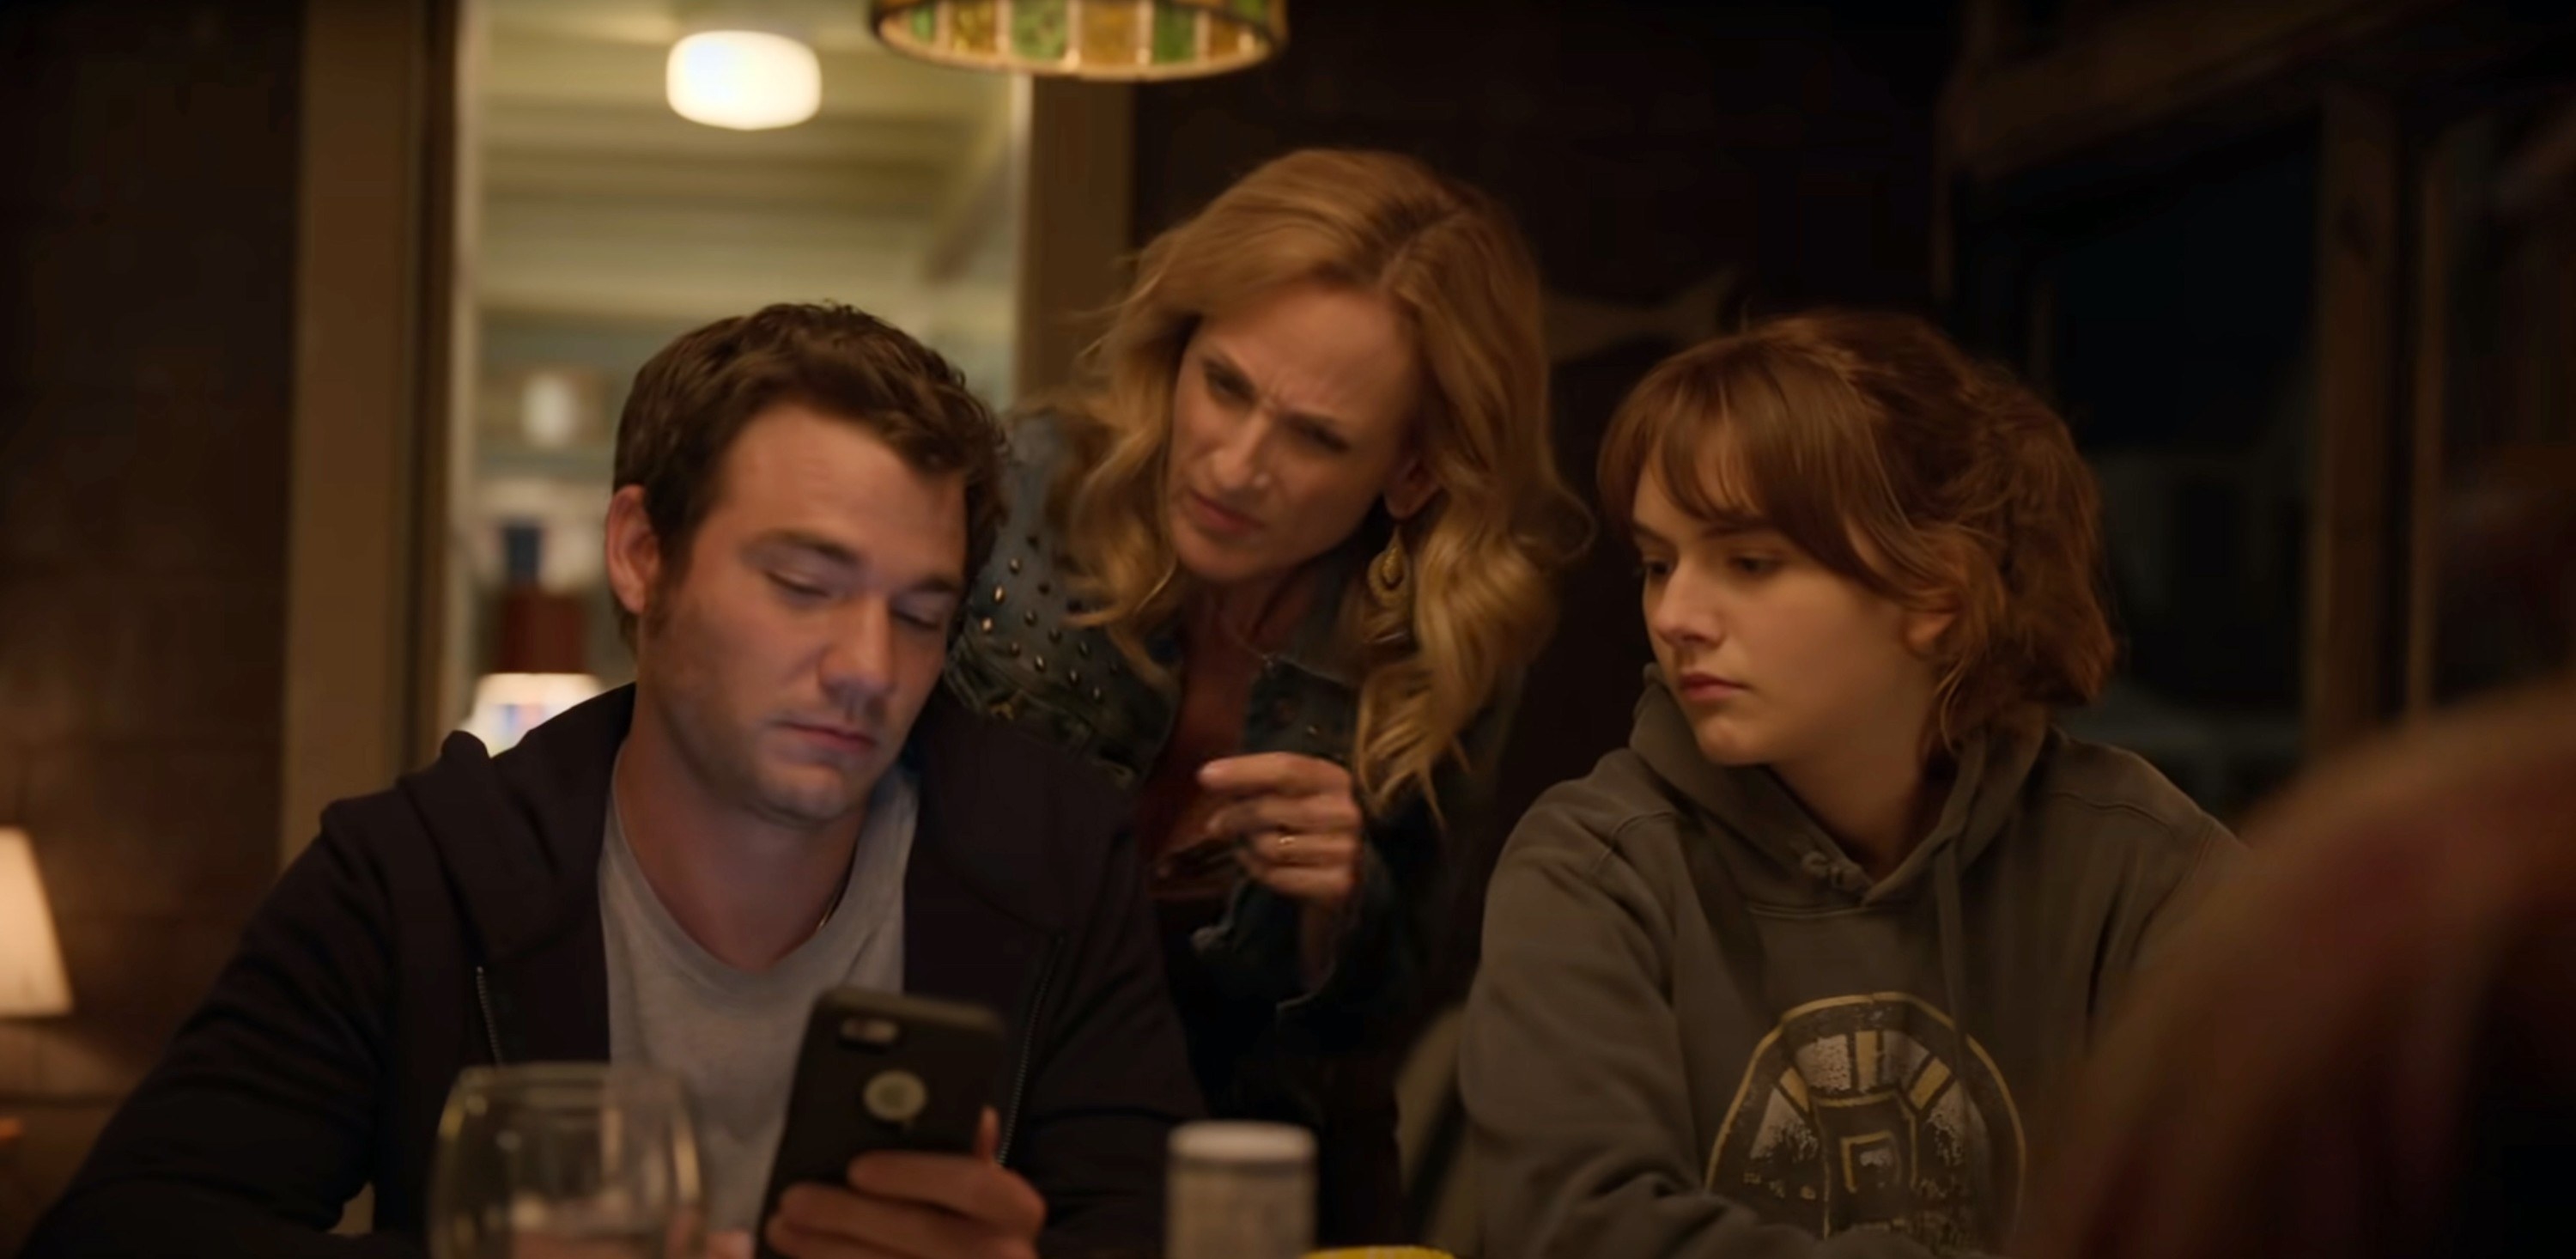 Daniel Durant, Marlee Matlin, and Emilia Jones look at a phone together